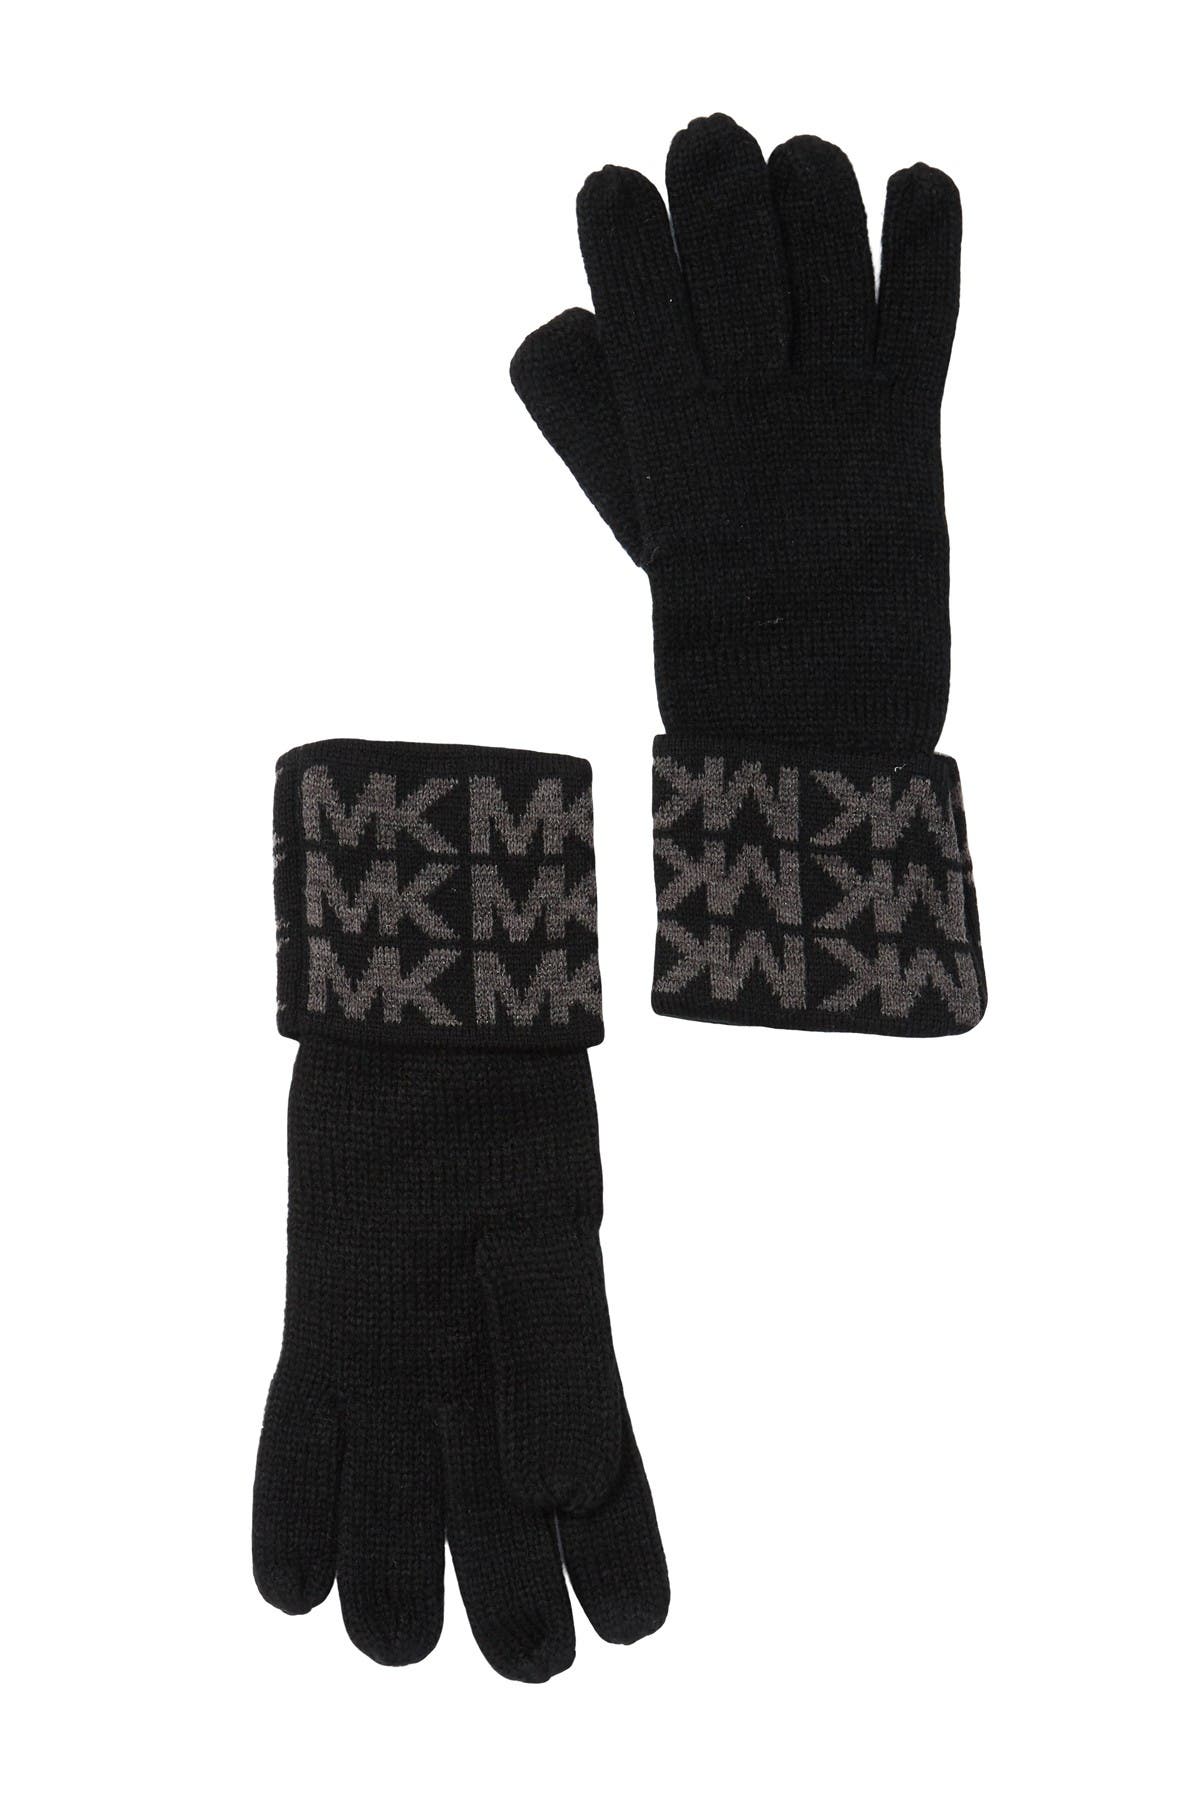 mk gloves nordstrom rack